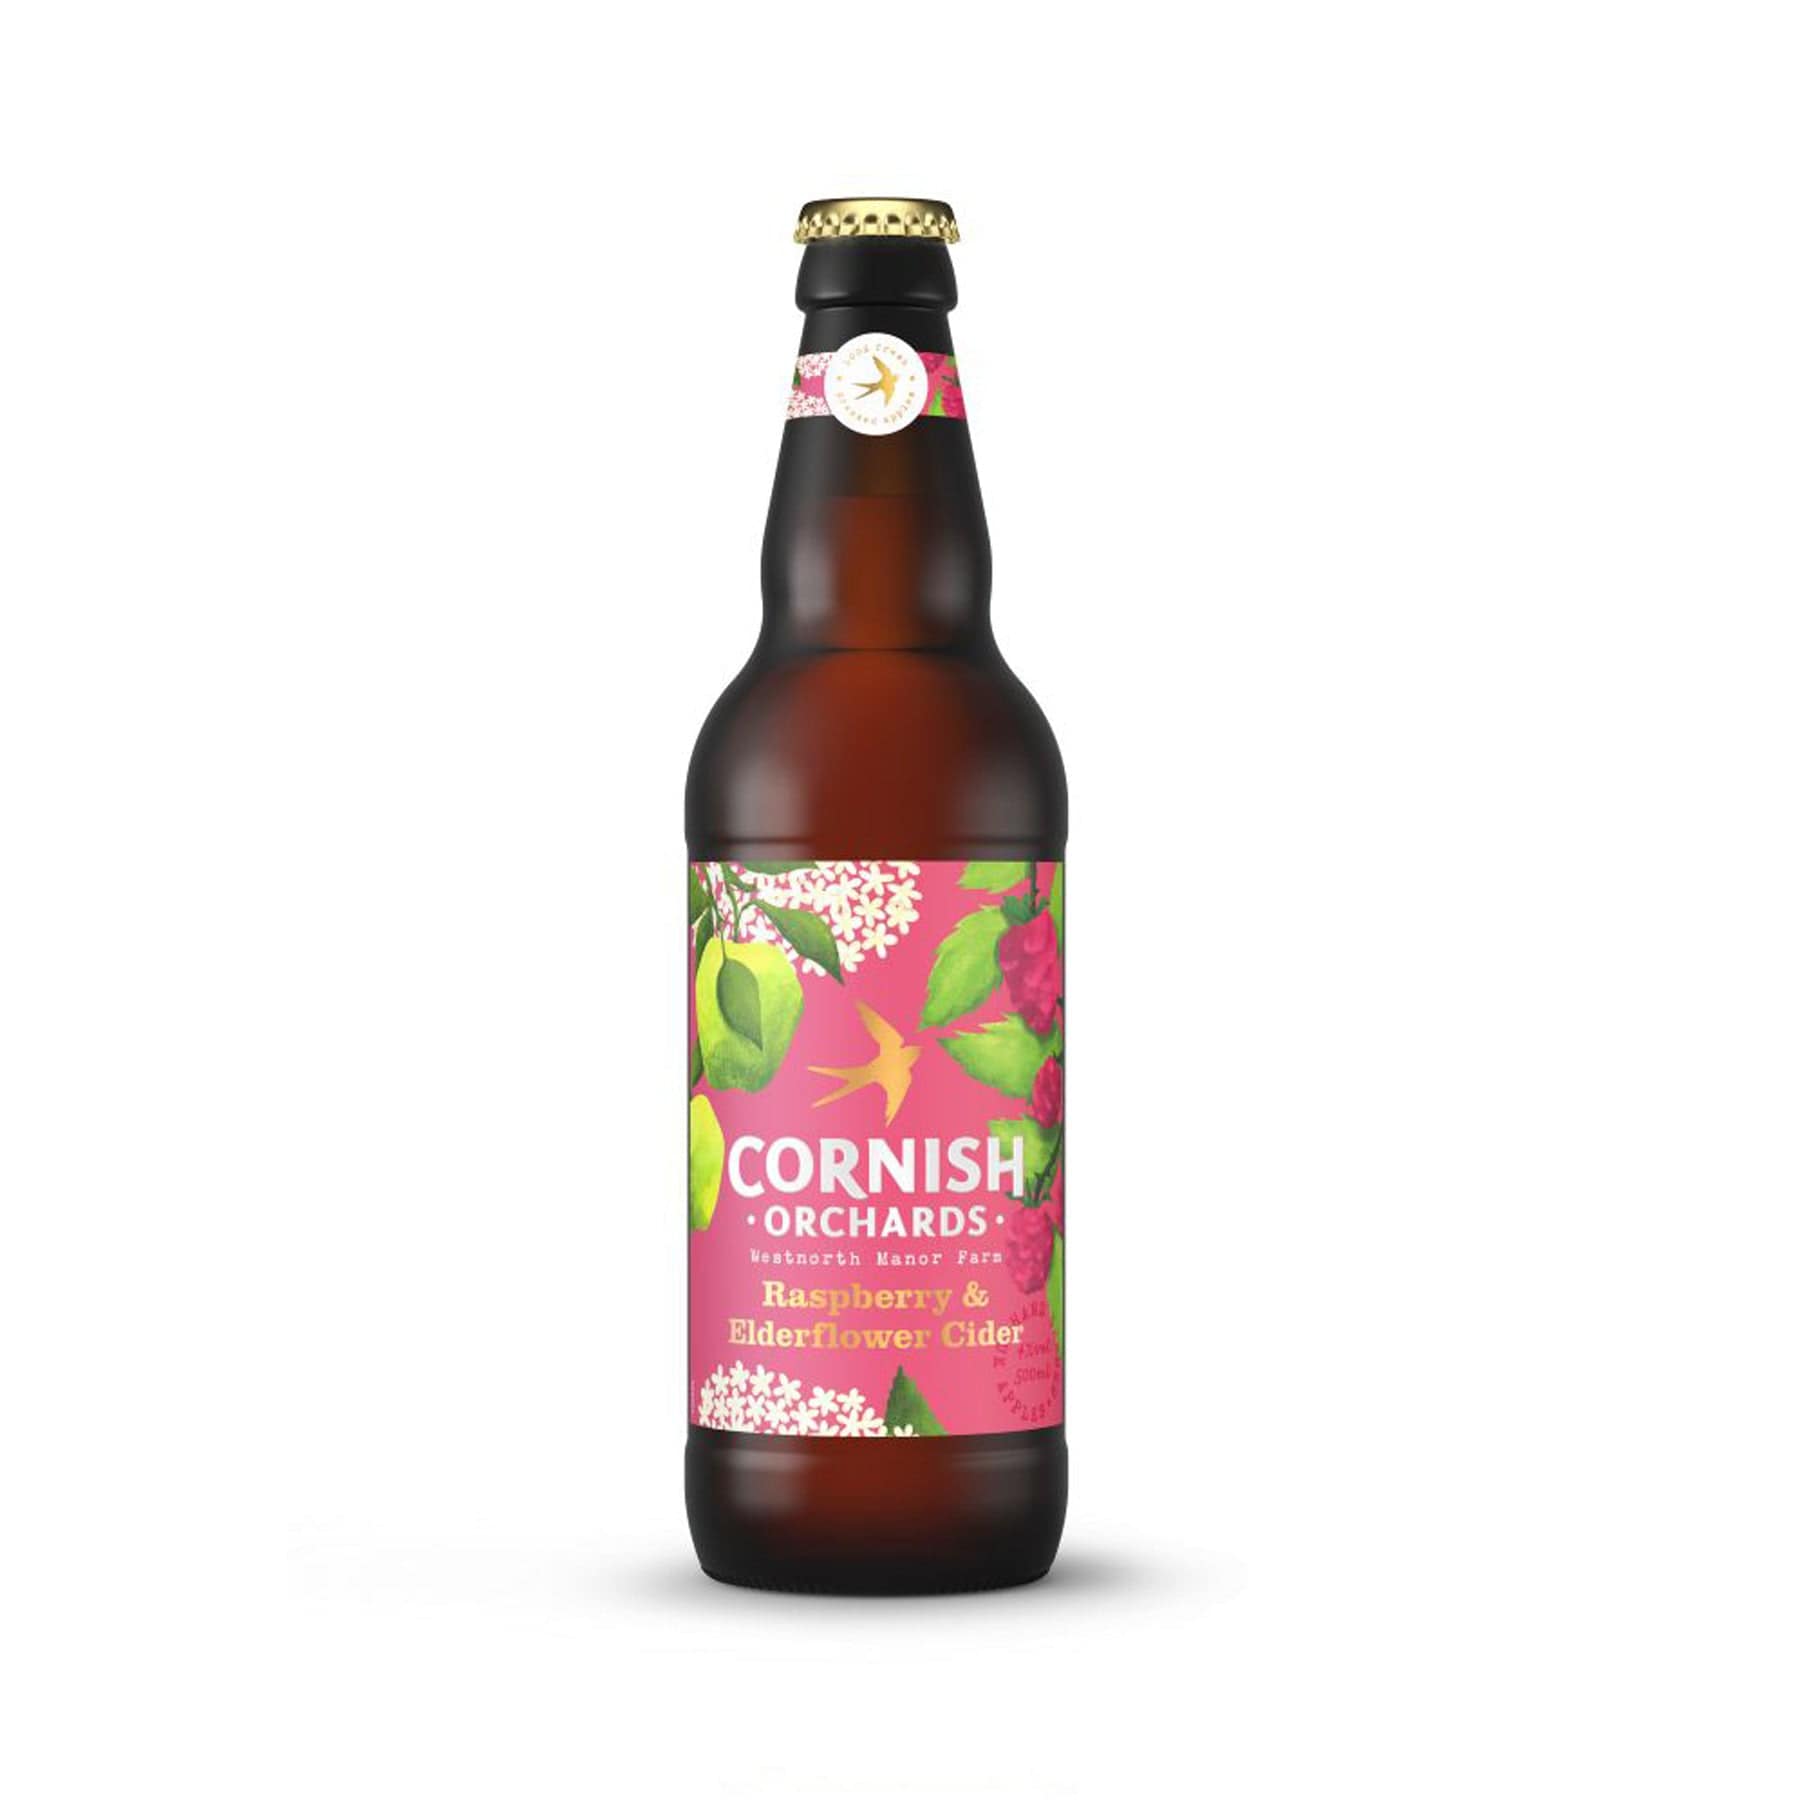 Cornish Orchards Raspberry & Elderflower Cider bottle, alcohol beverage, fruity craft cider, pink and green label design, isolated on white background